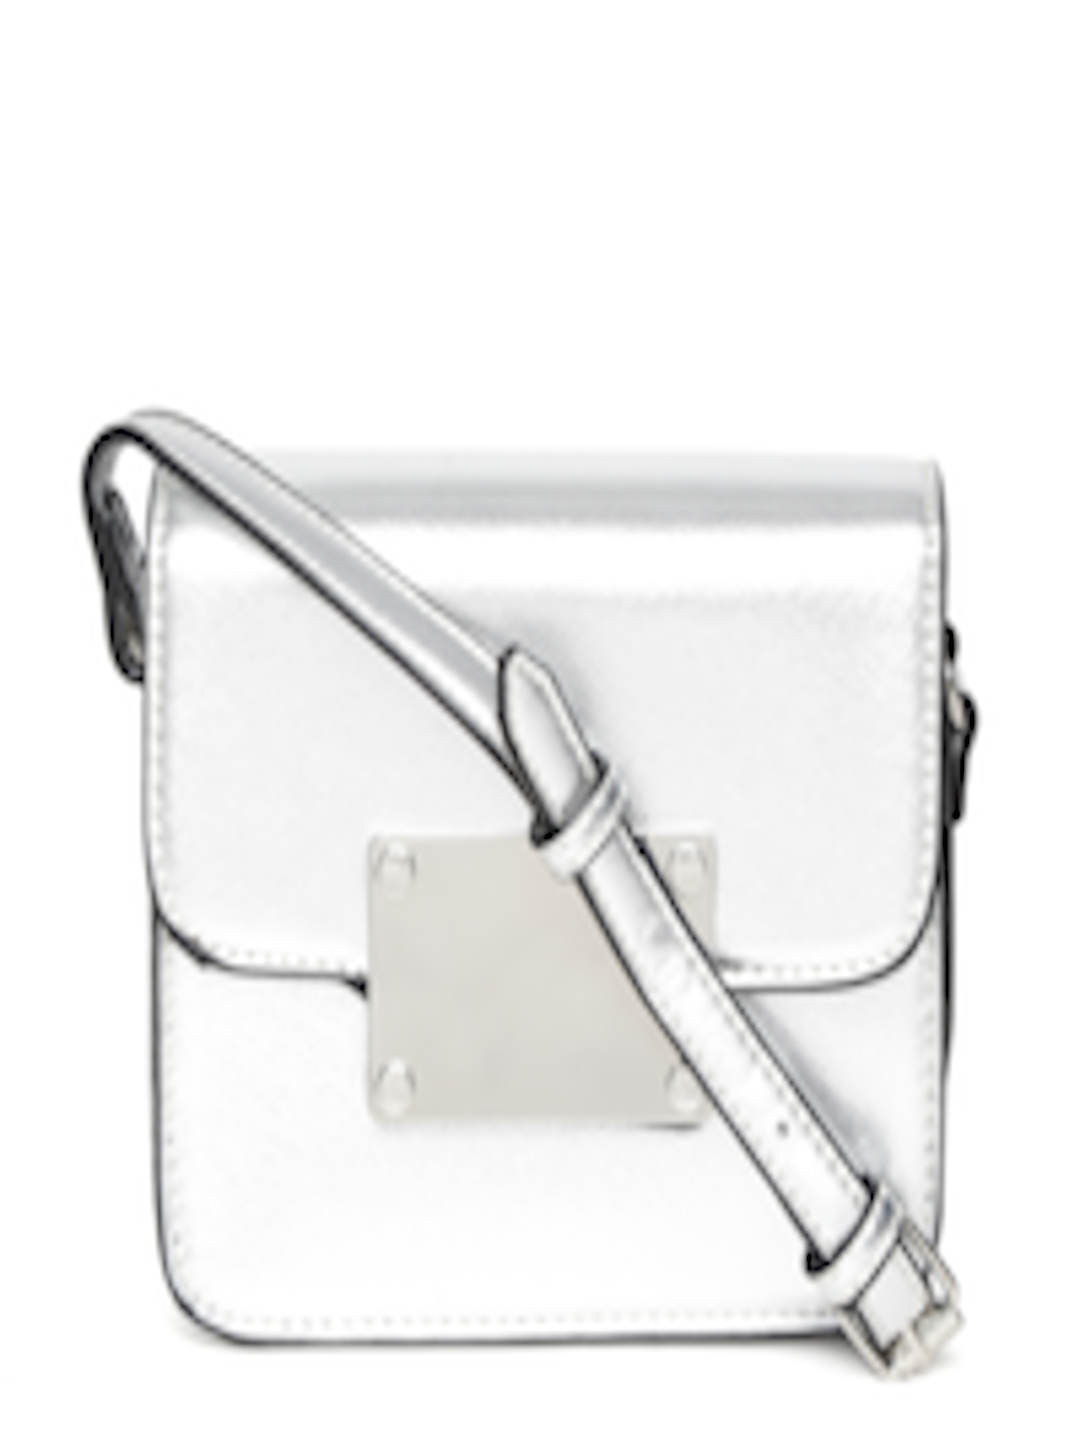 Buy ALDO Silver Toned Sling Bag - Handbags for Women 1620886 | Myntra